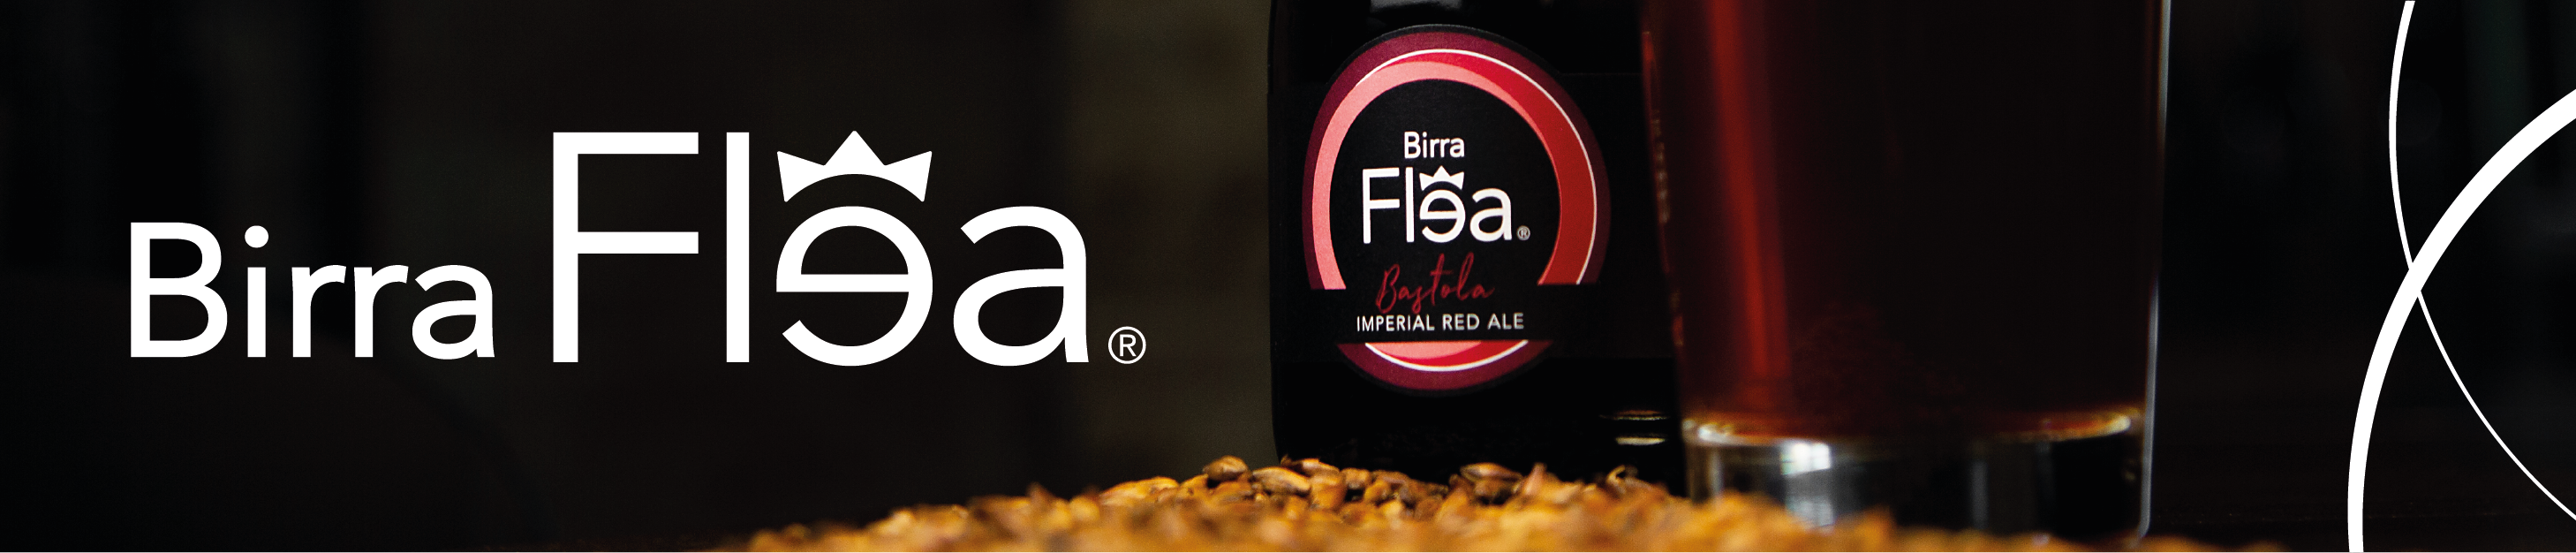 Birra Flea 700×150